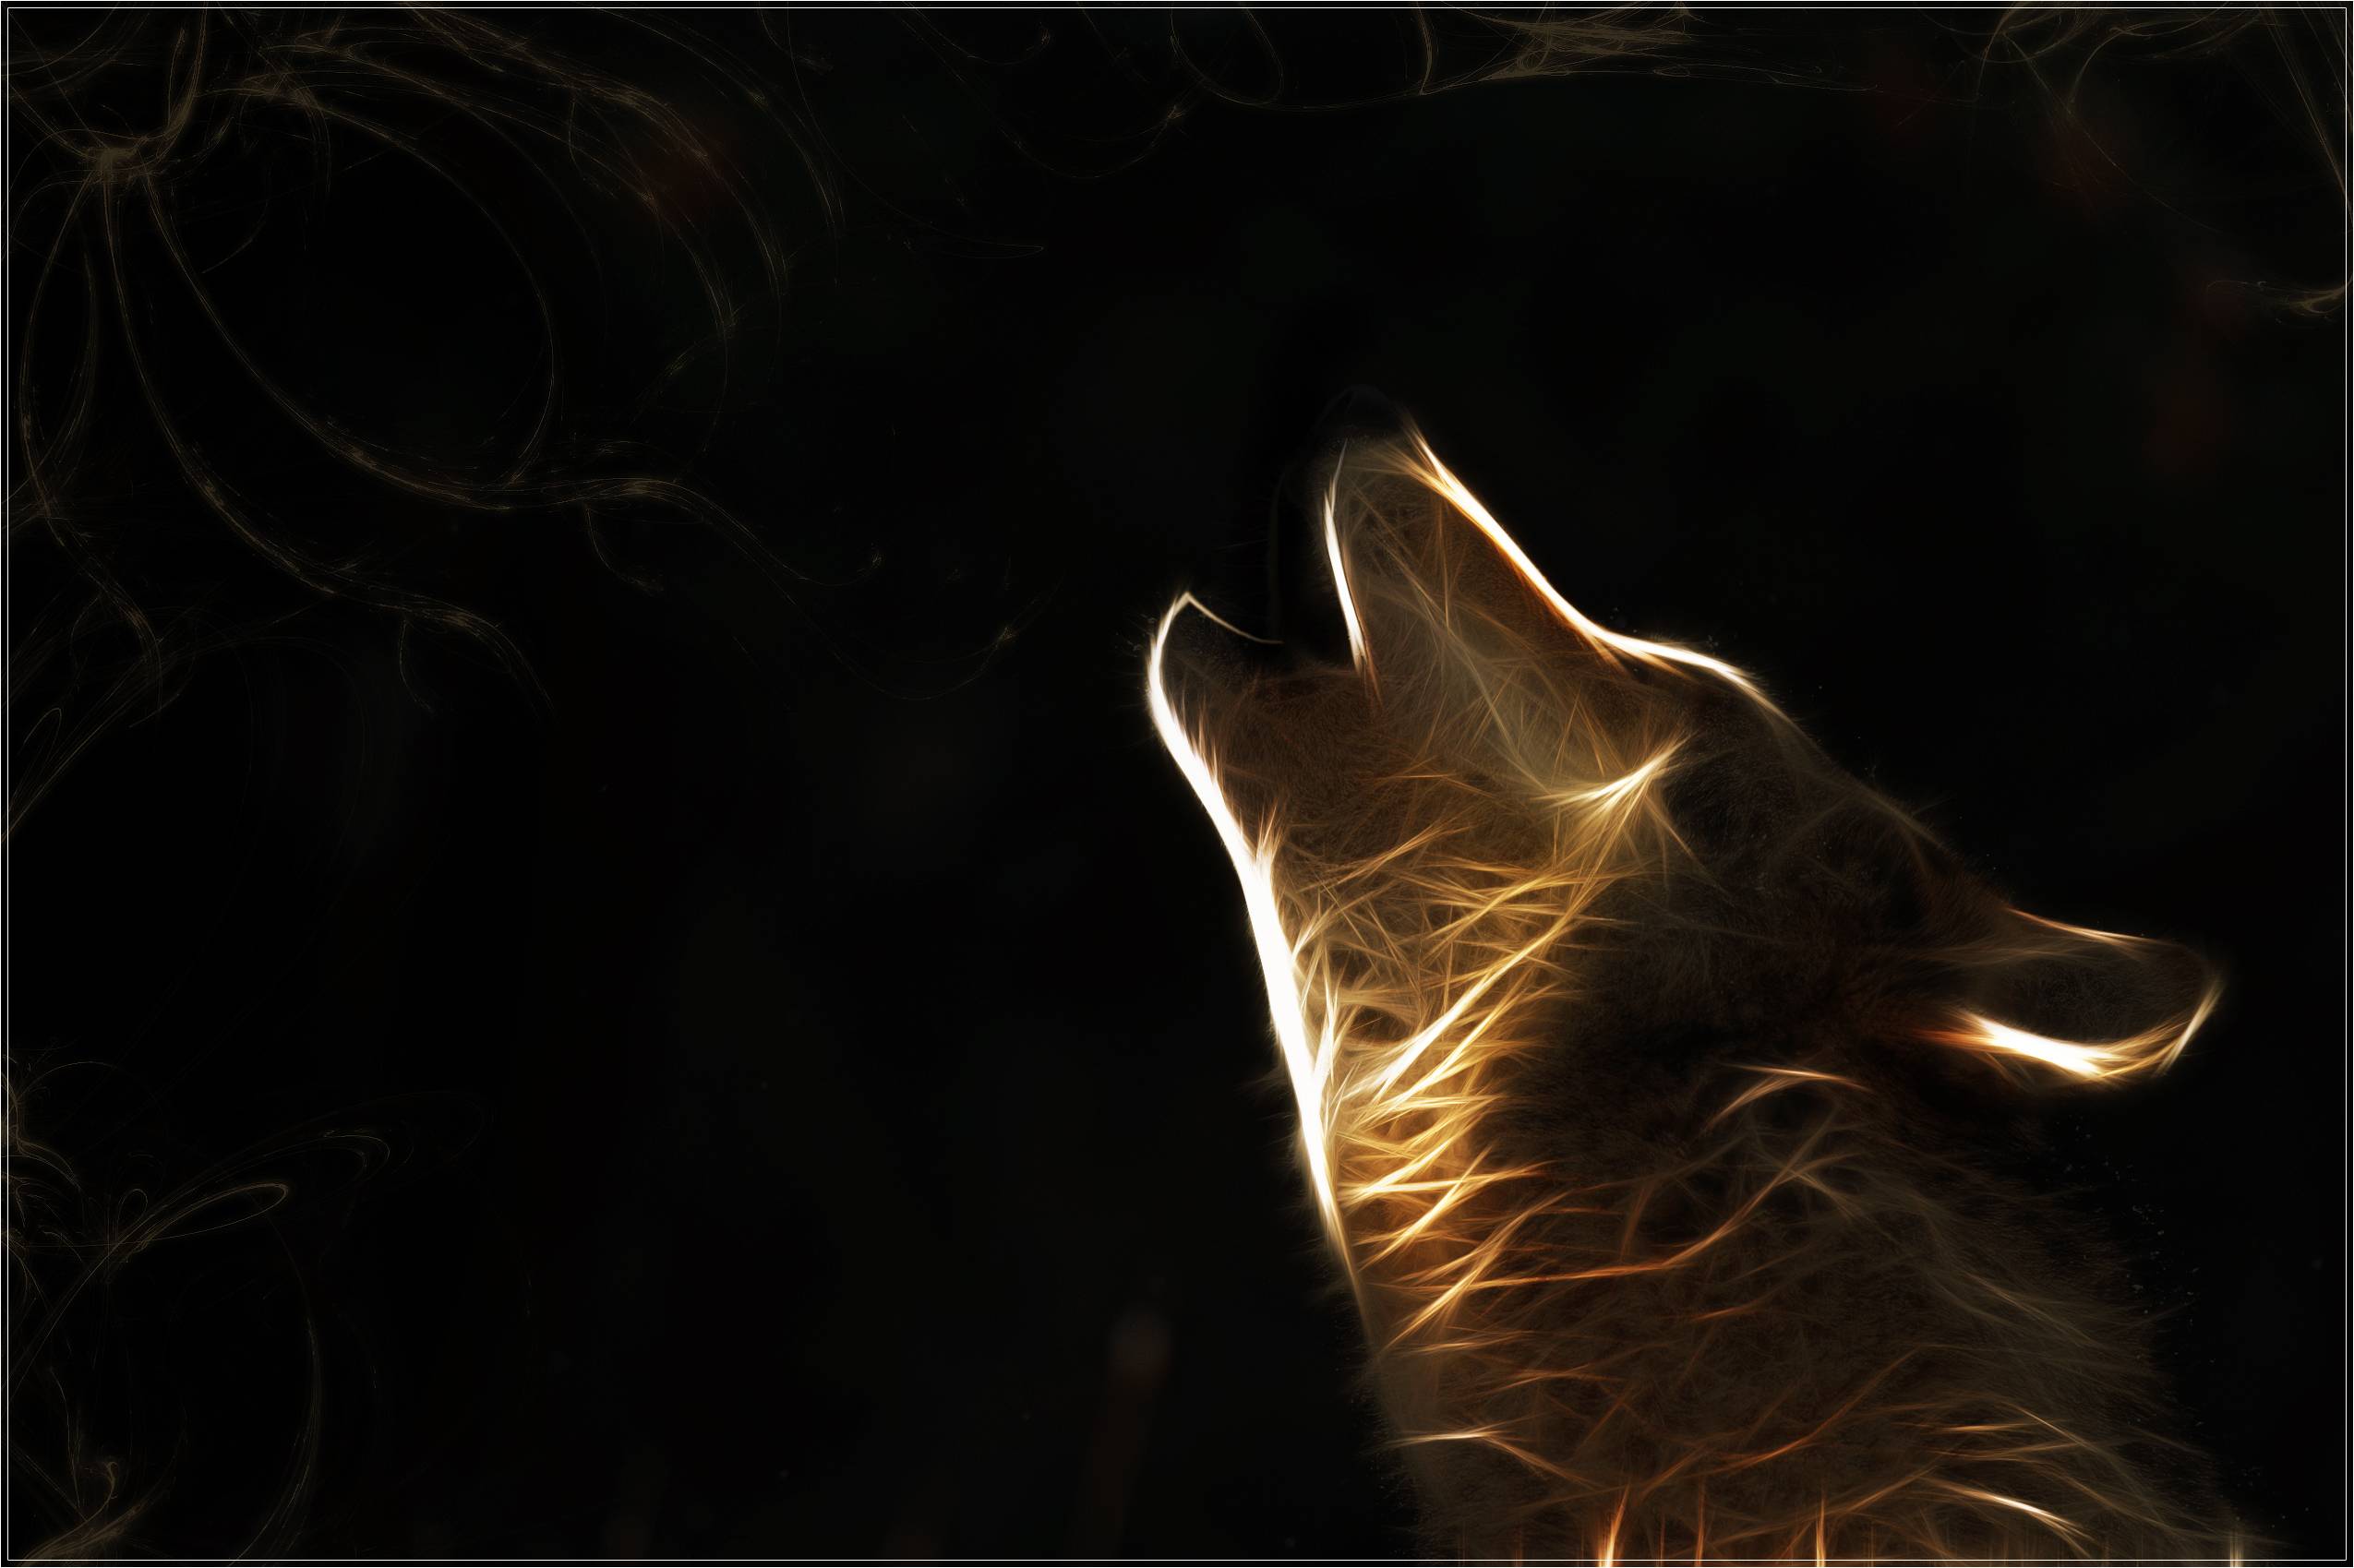 Download wallpaper: wolf, wallpaper, photo, for desktop